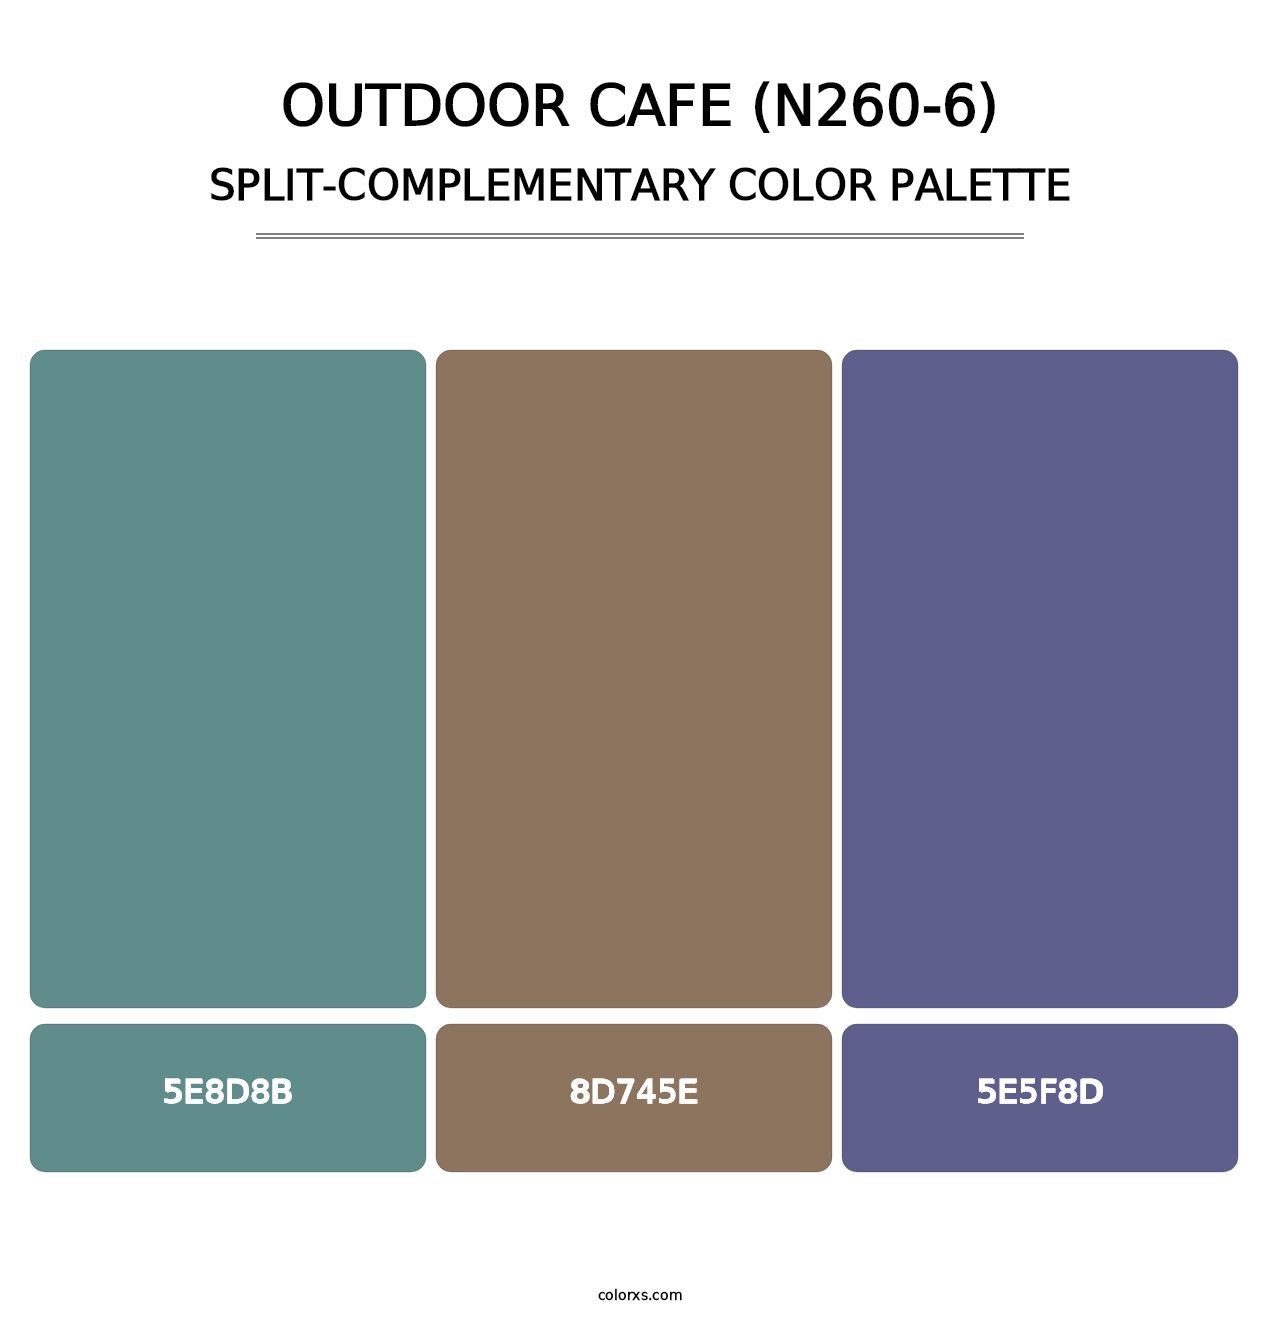 Outdoor Cafe (N260-6) - Split-Complementary Color Palette